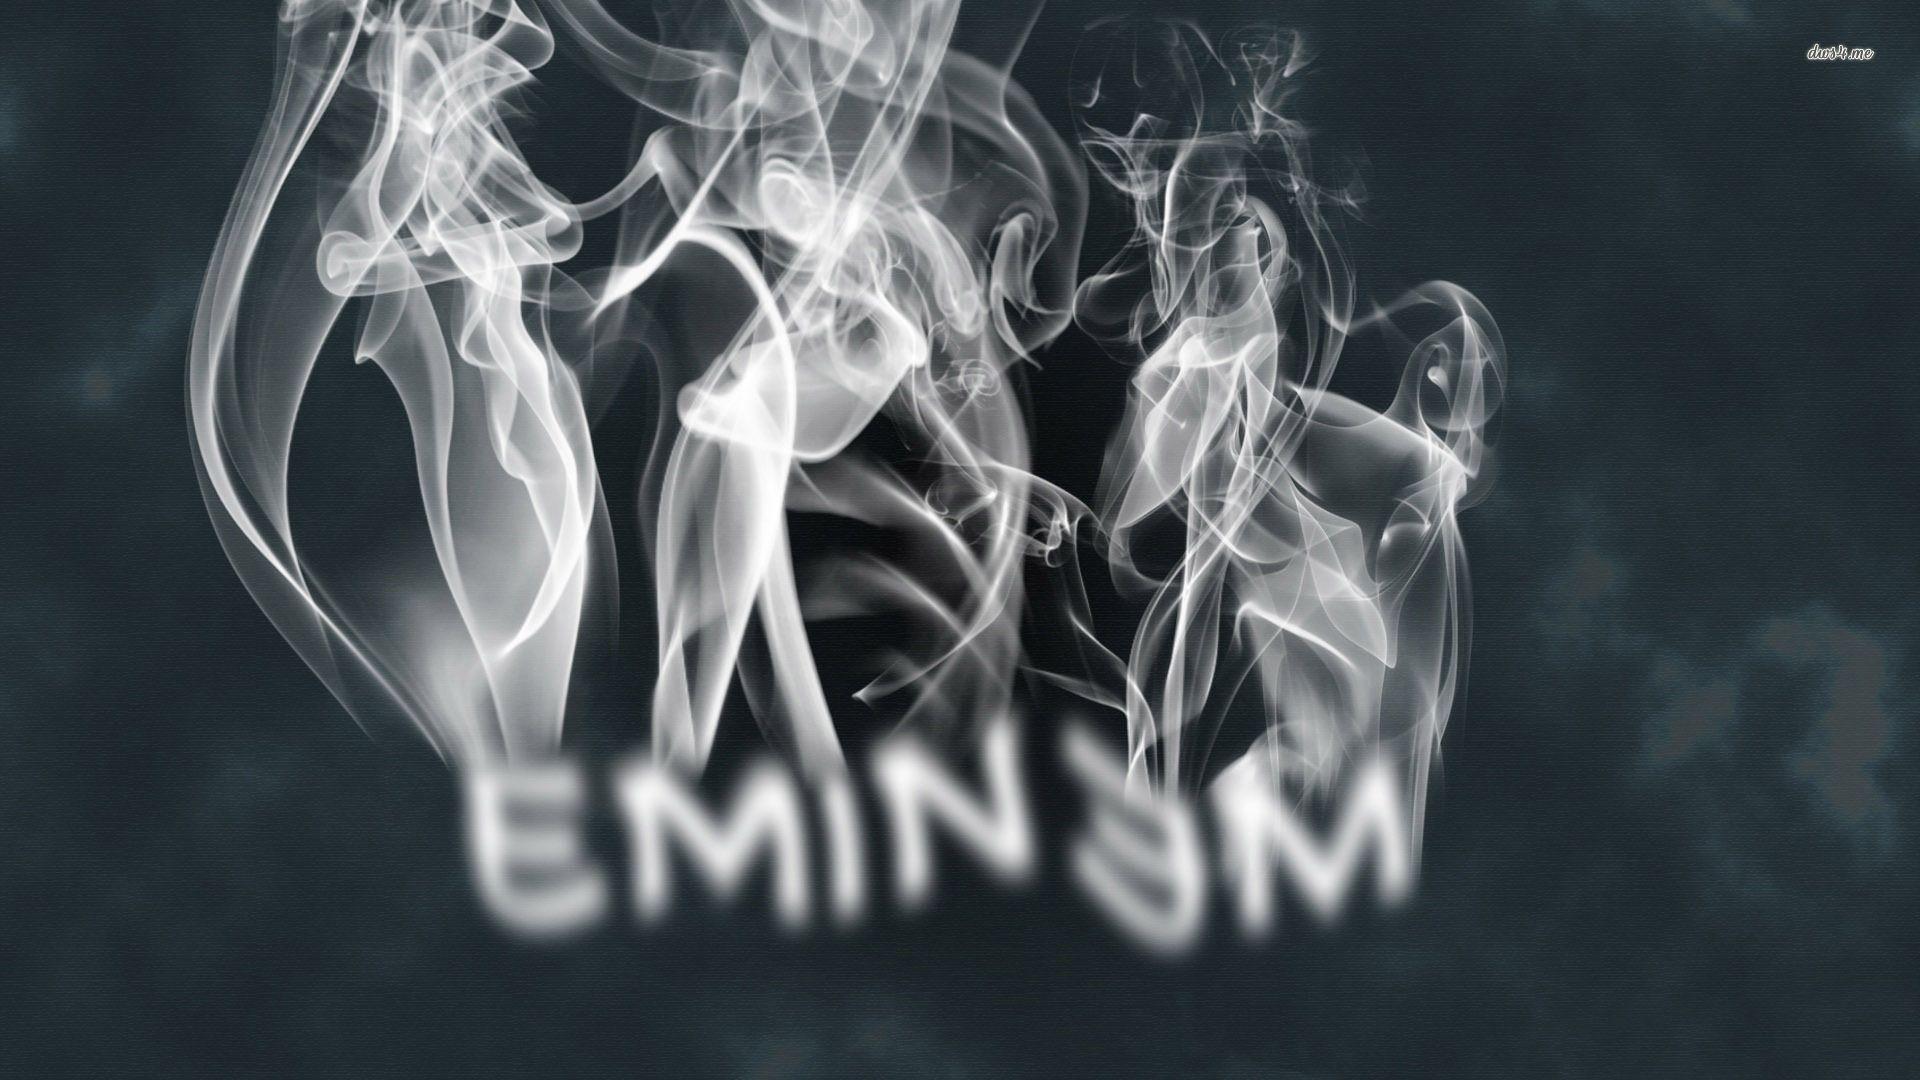 1920 x 1080 · jpeg - Eminem Wallpapers HD 2015 - Wallpaper Cave